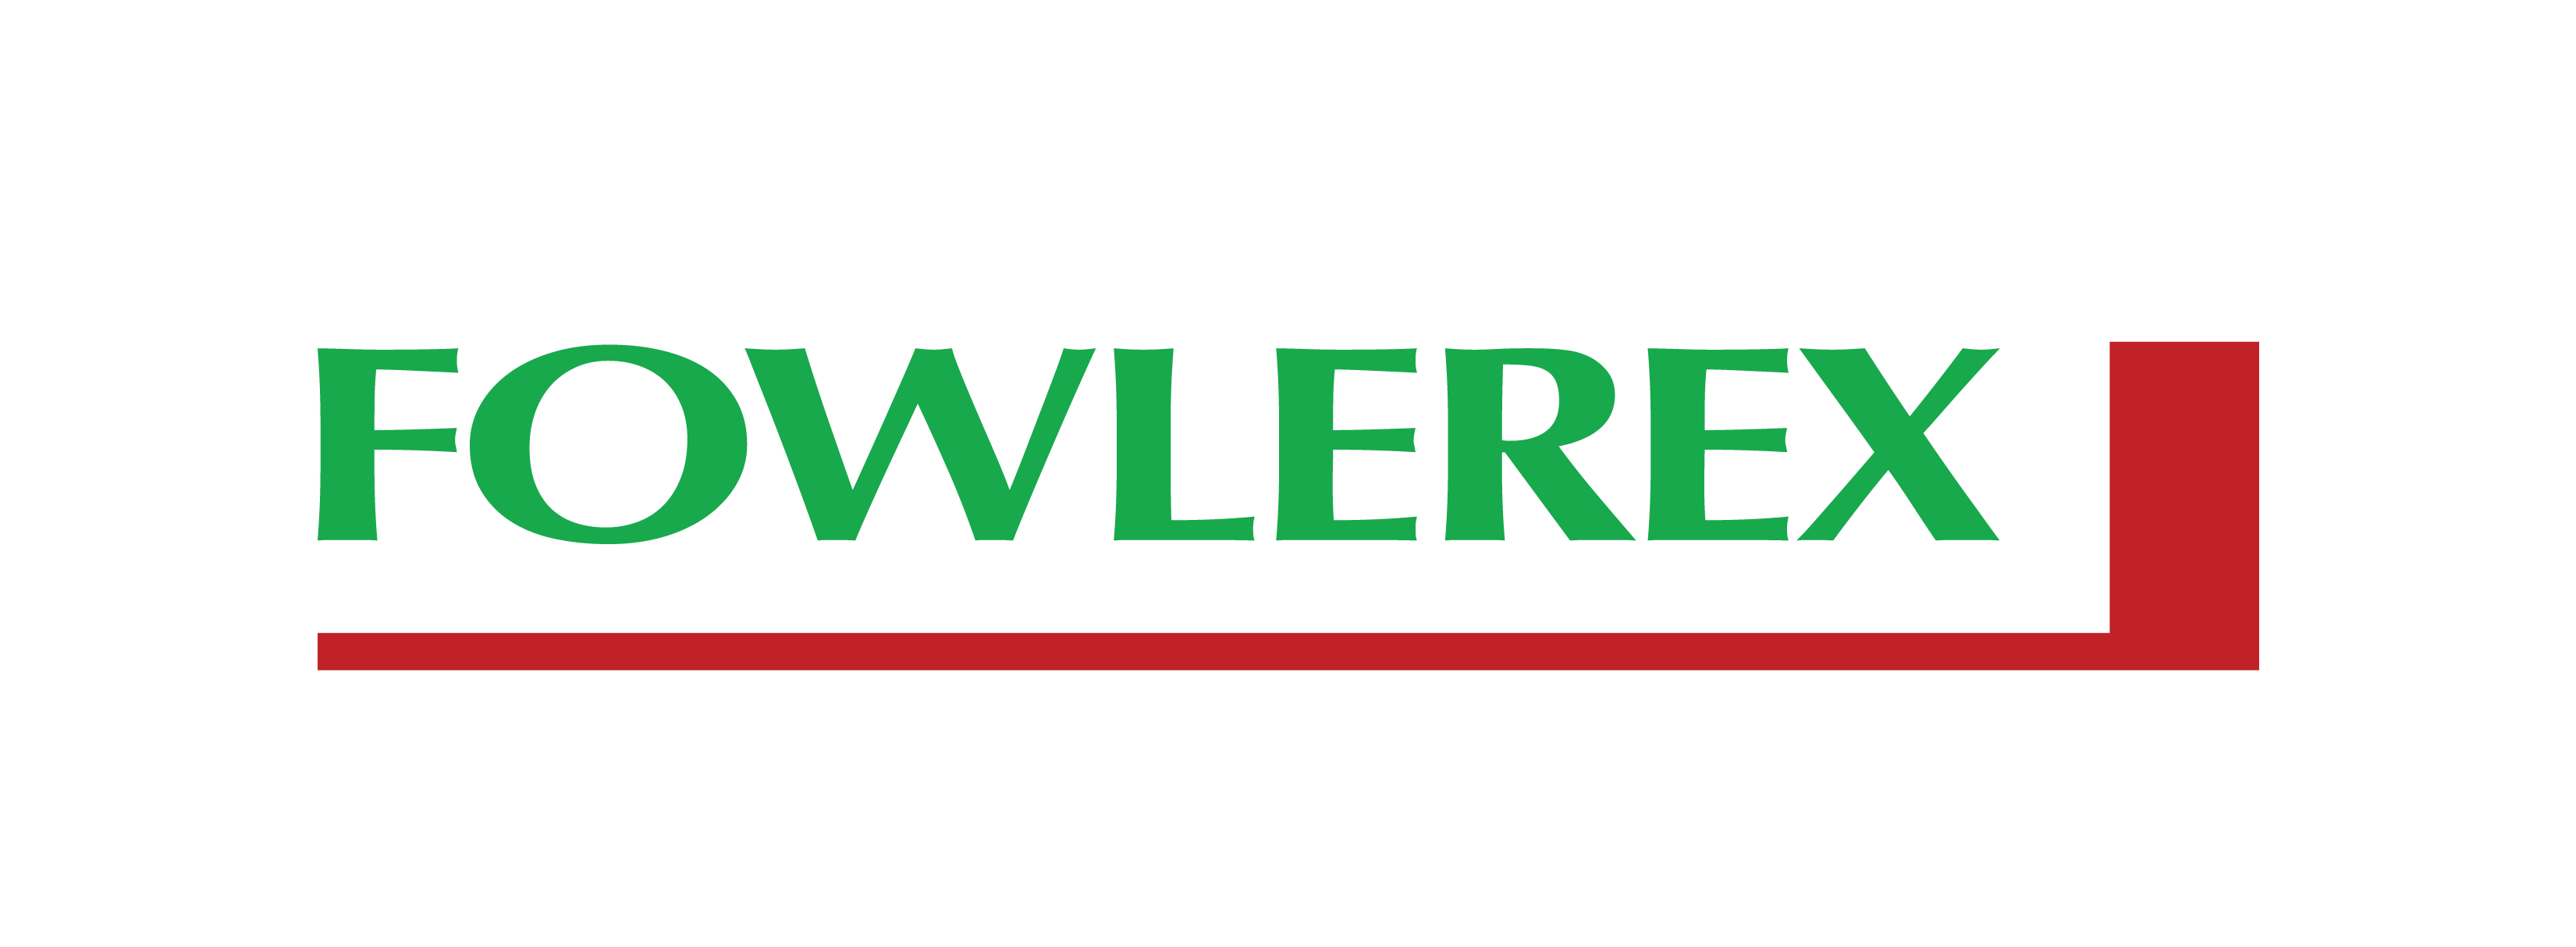 Fowlerex Logo-02 v3.0 clear backgroud